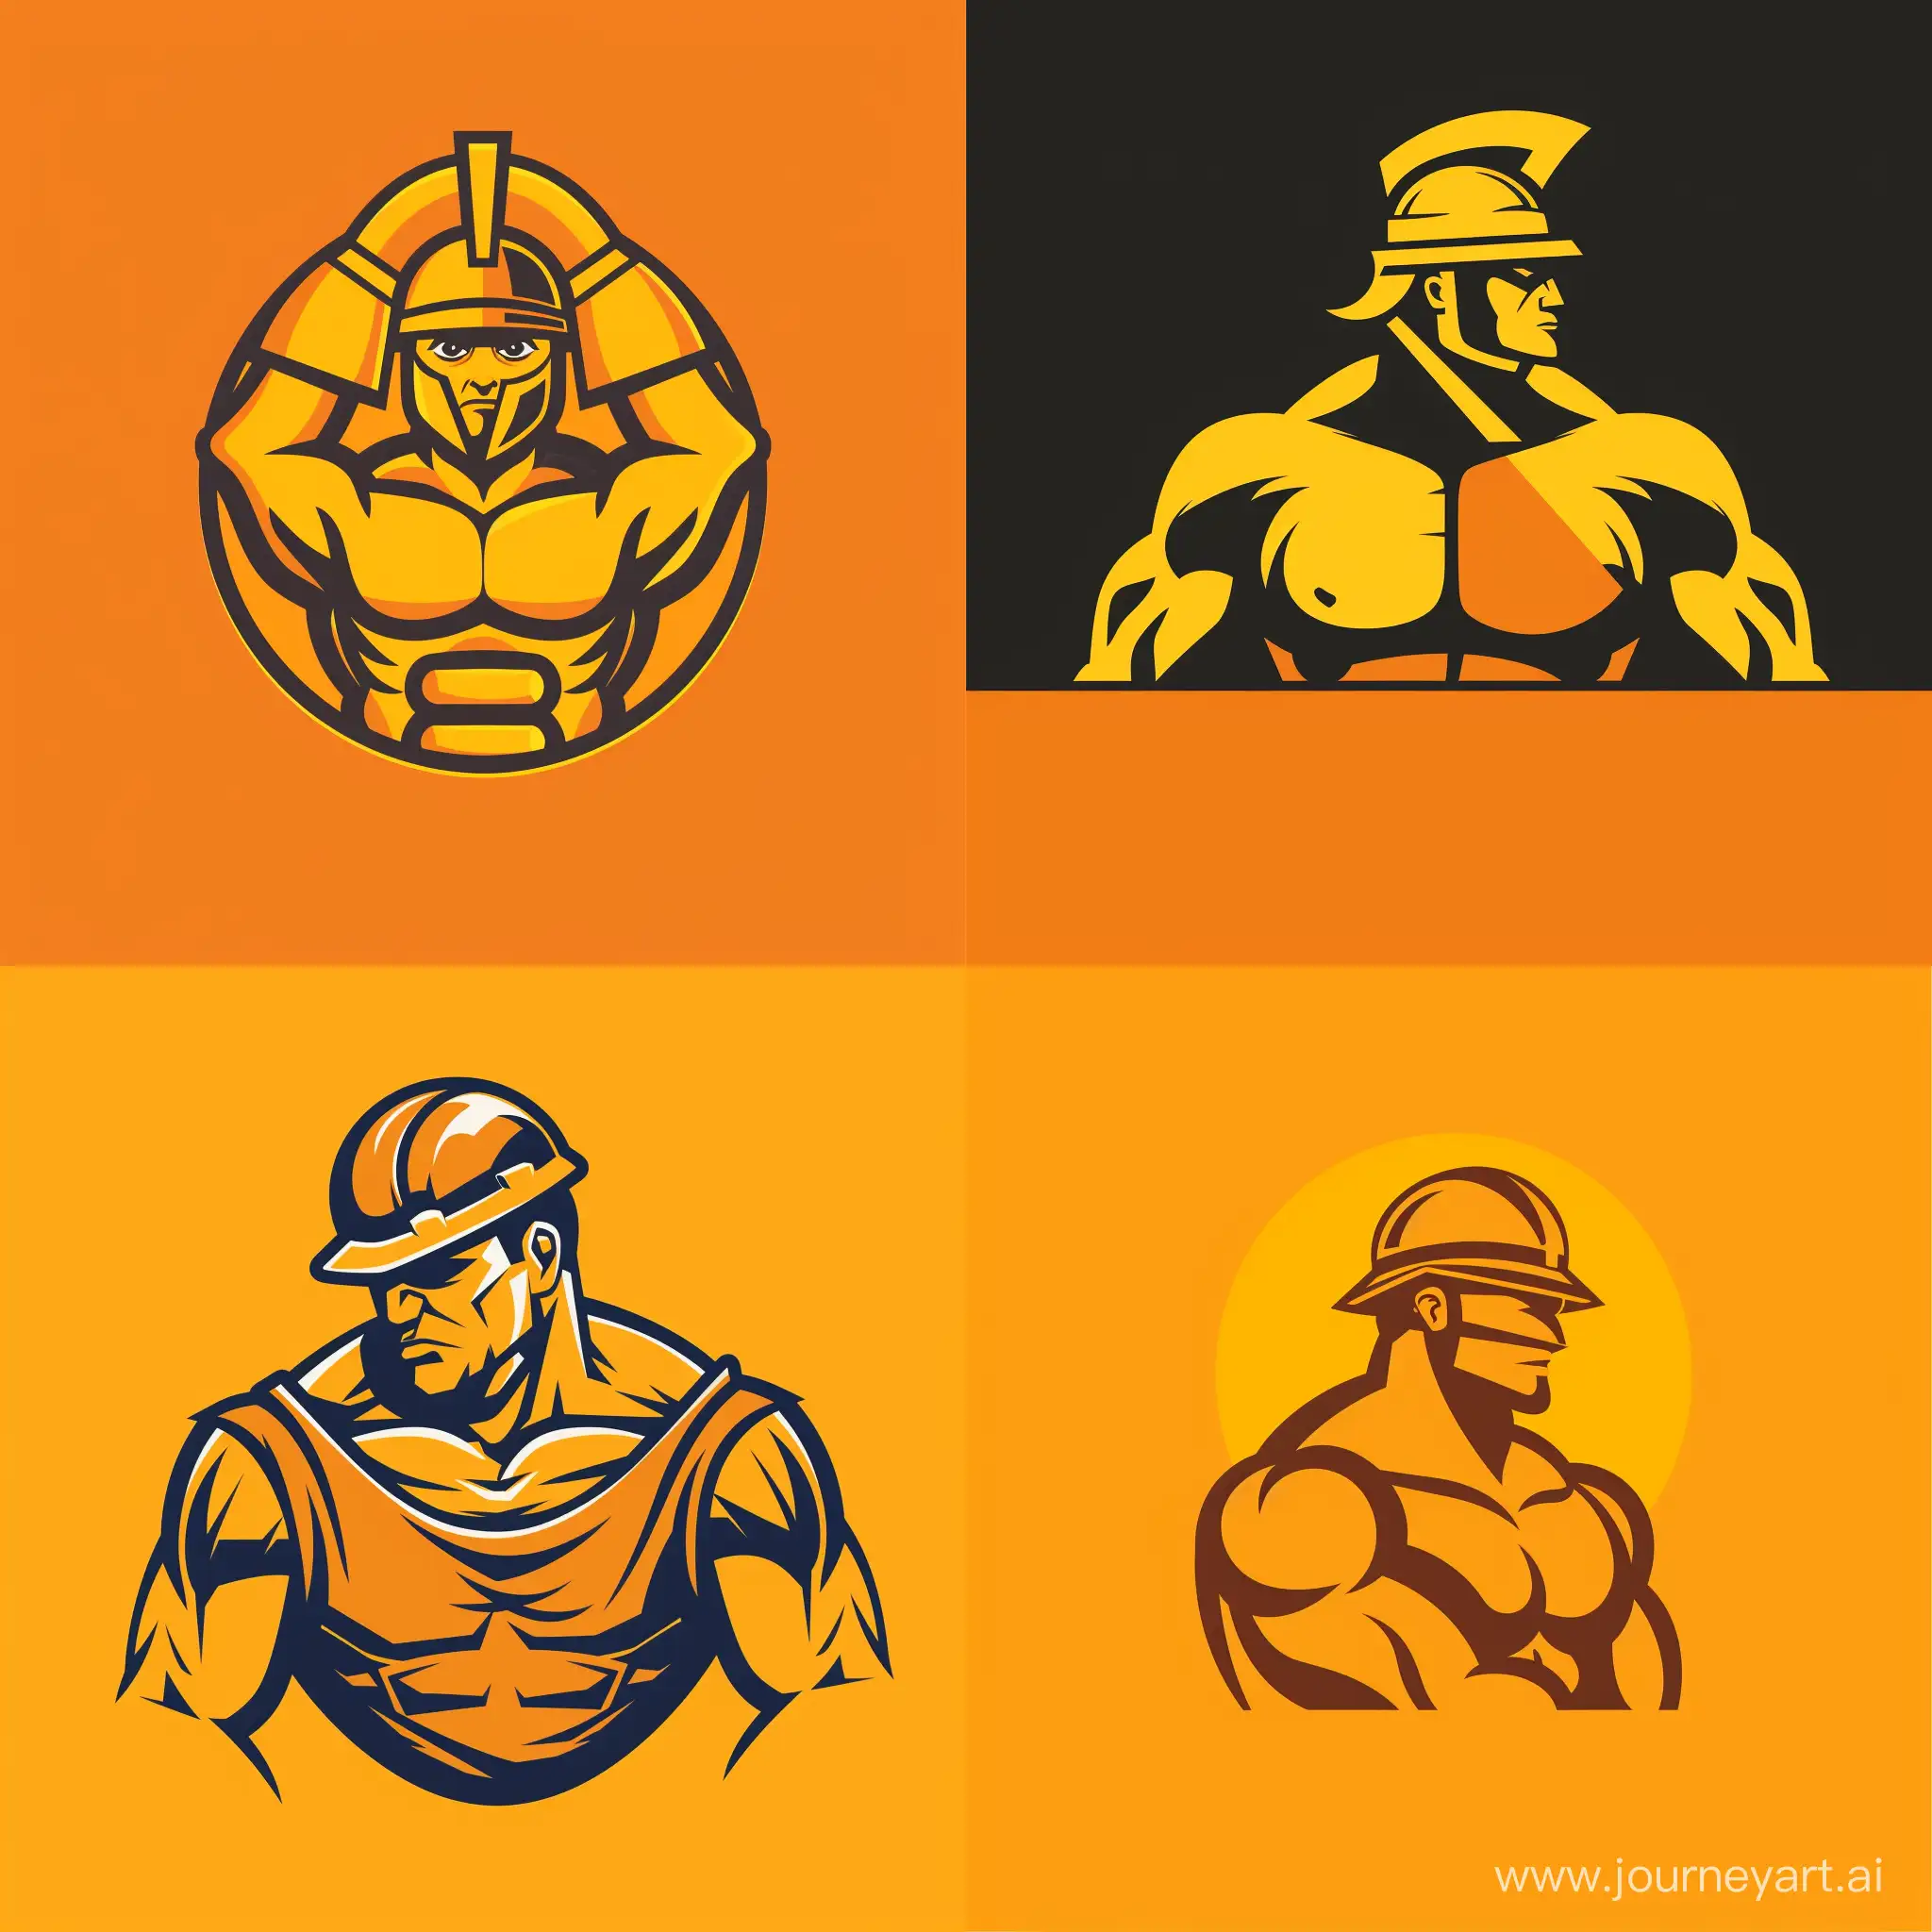 Powerful-Construction-Worker-Logo-in-Striking-YellowOrange